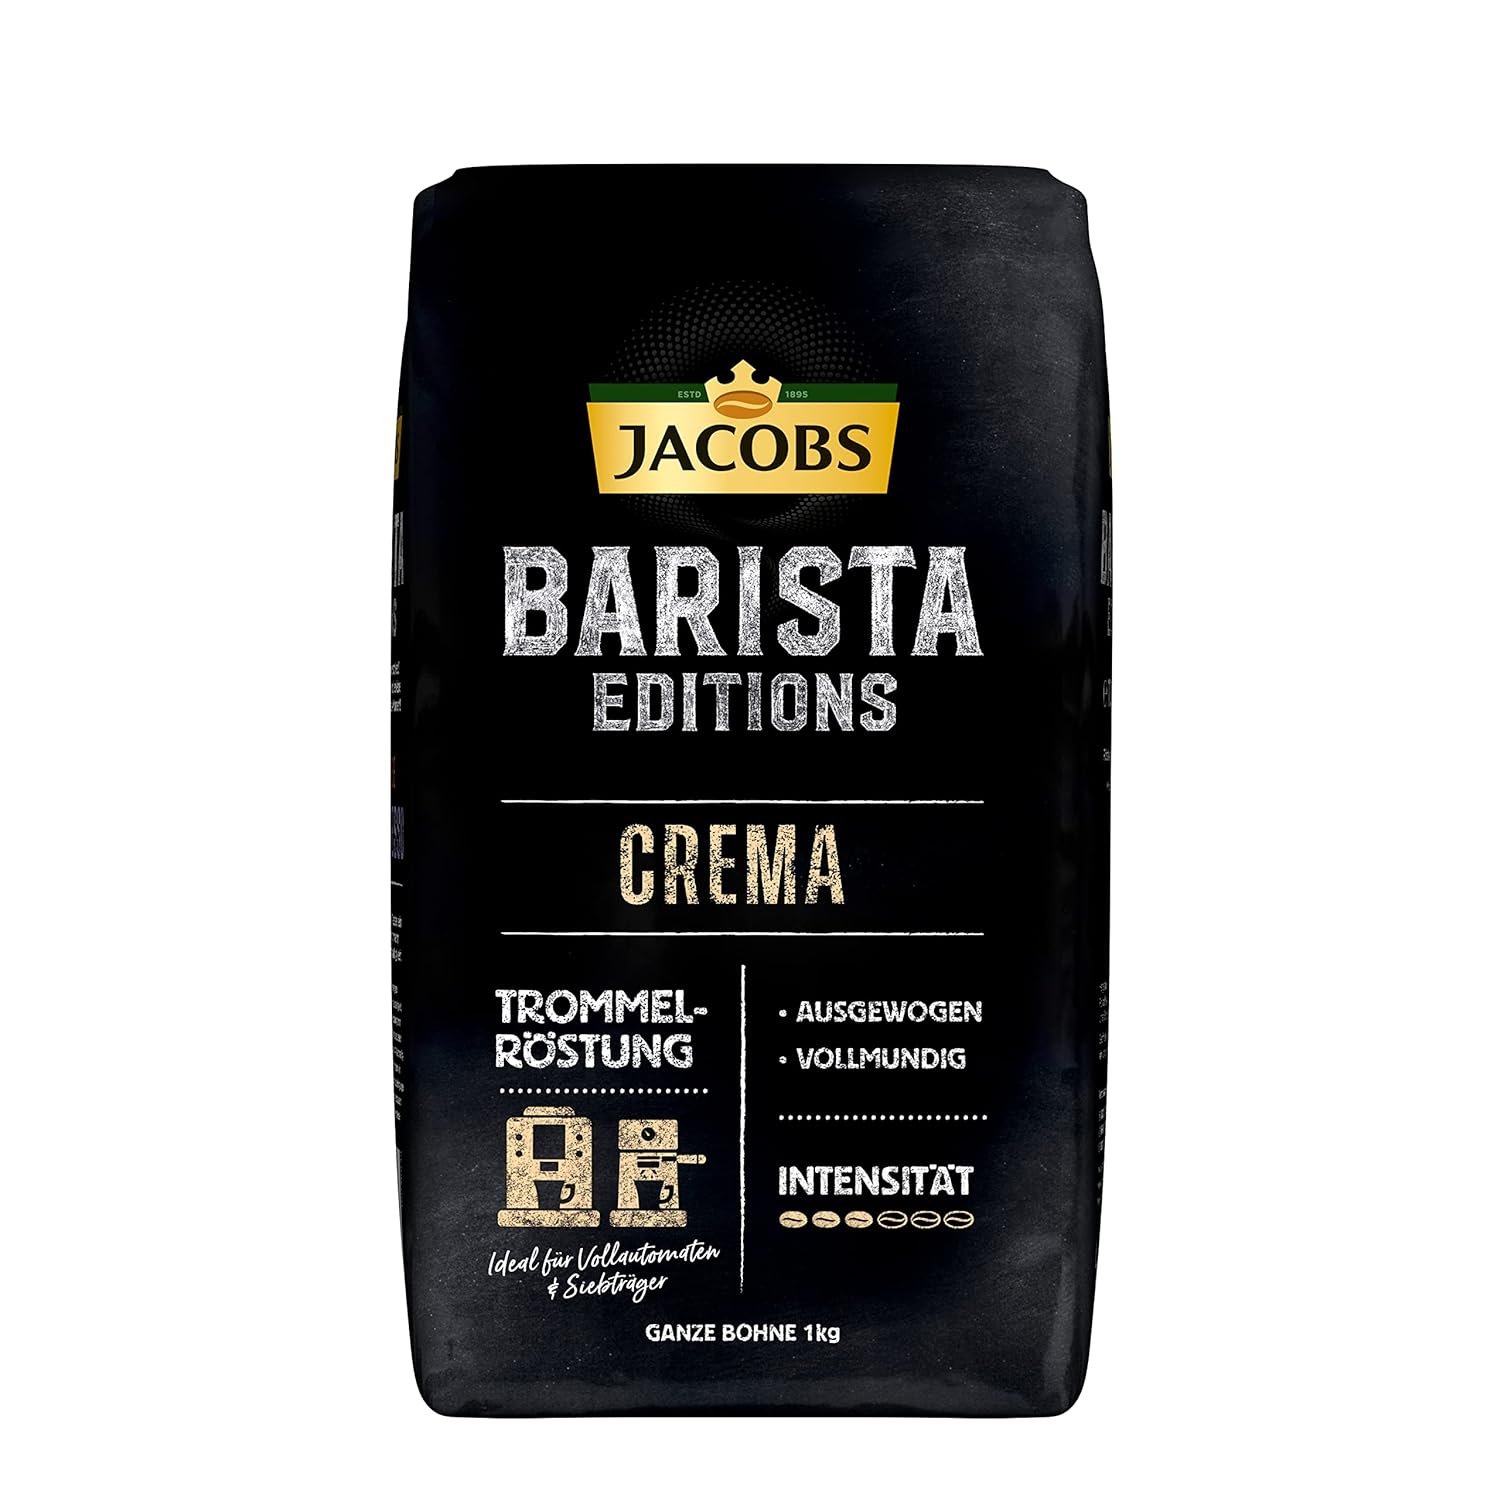 Jacobs Barista Editions Crema Coffee Beans 1 kg Bean Coffee